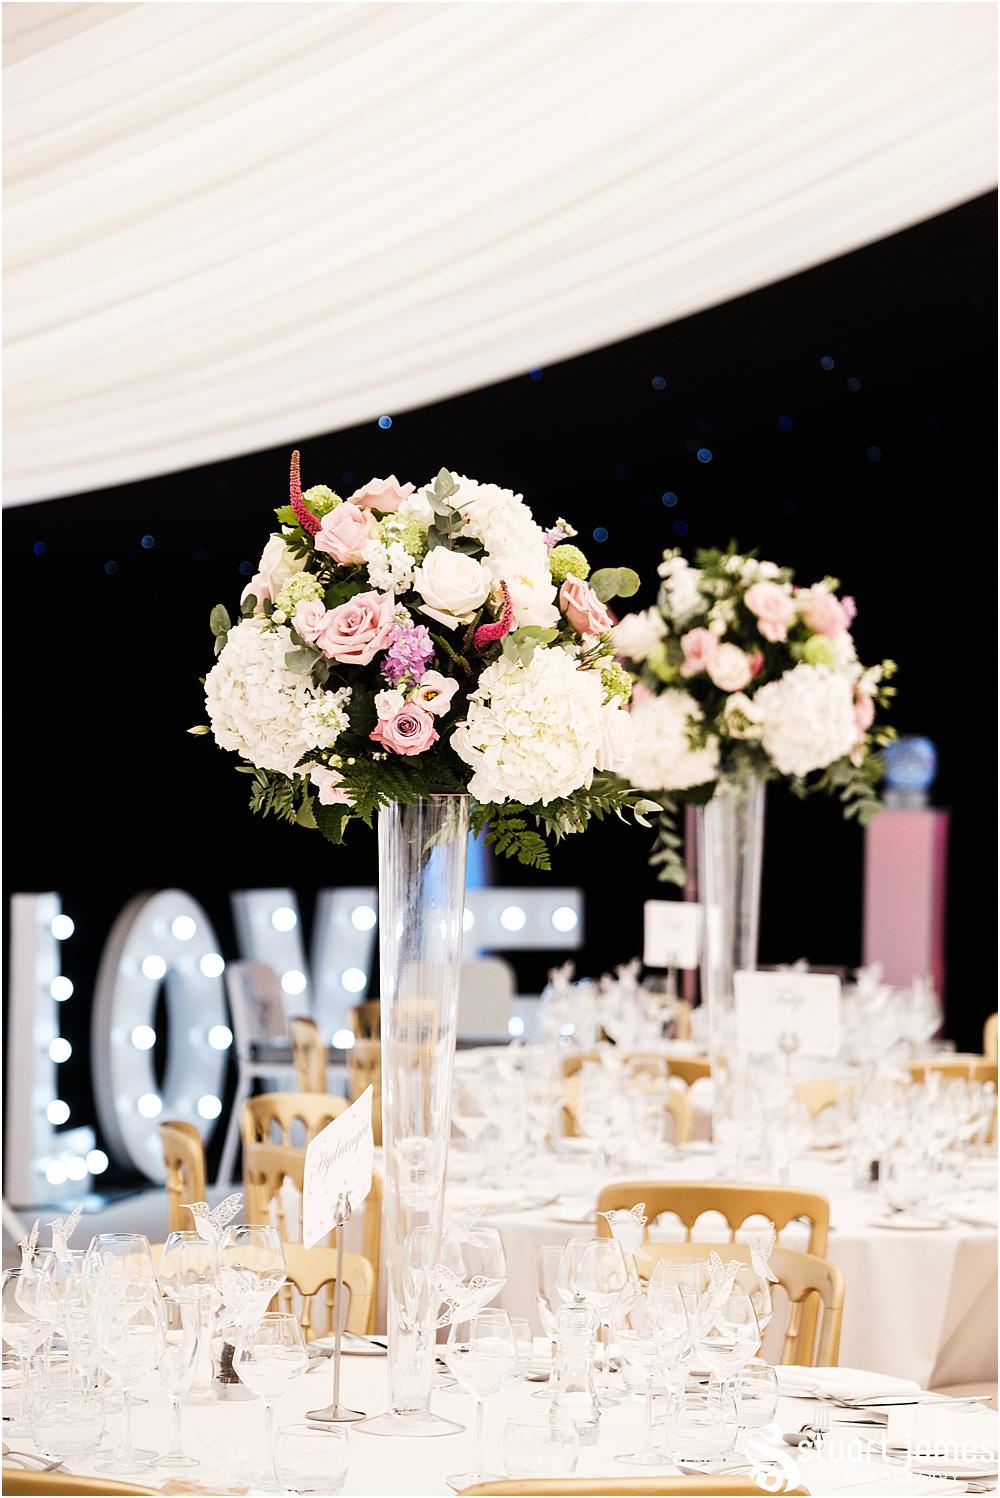 Stunning decor with fresh flowers from Flower Design of Lichfield - Newton Solney Wedding Photographer Stuart James